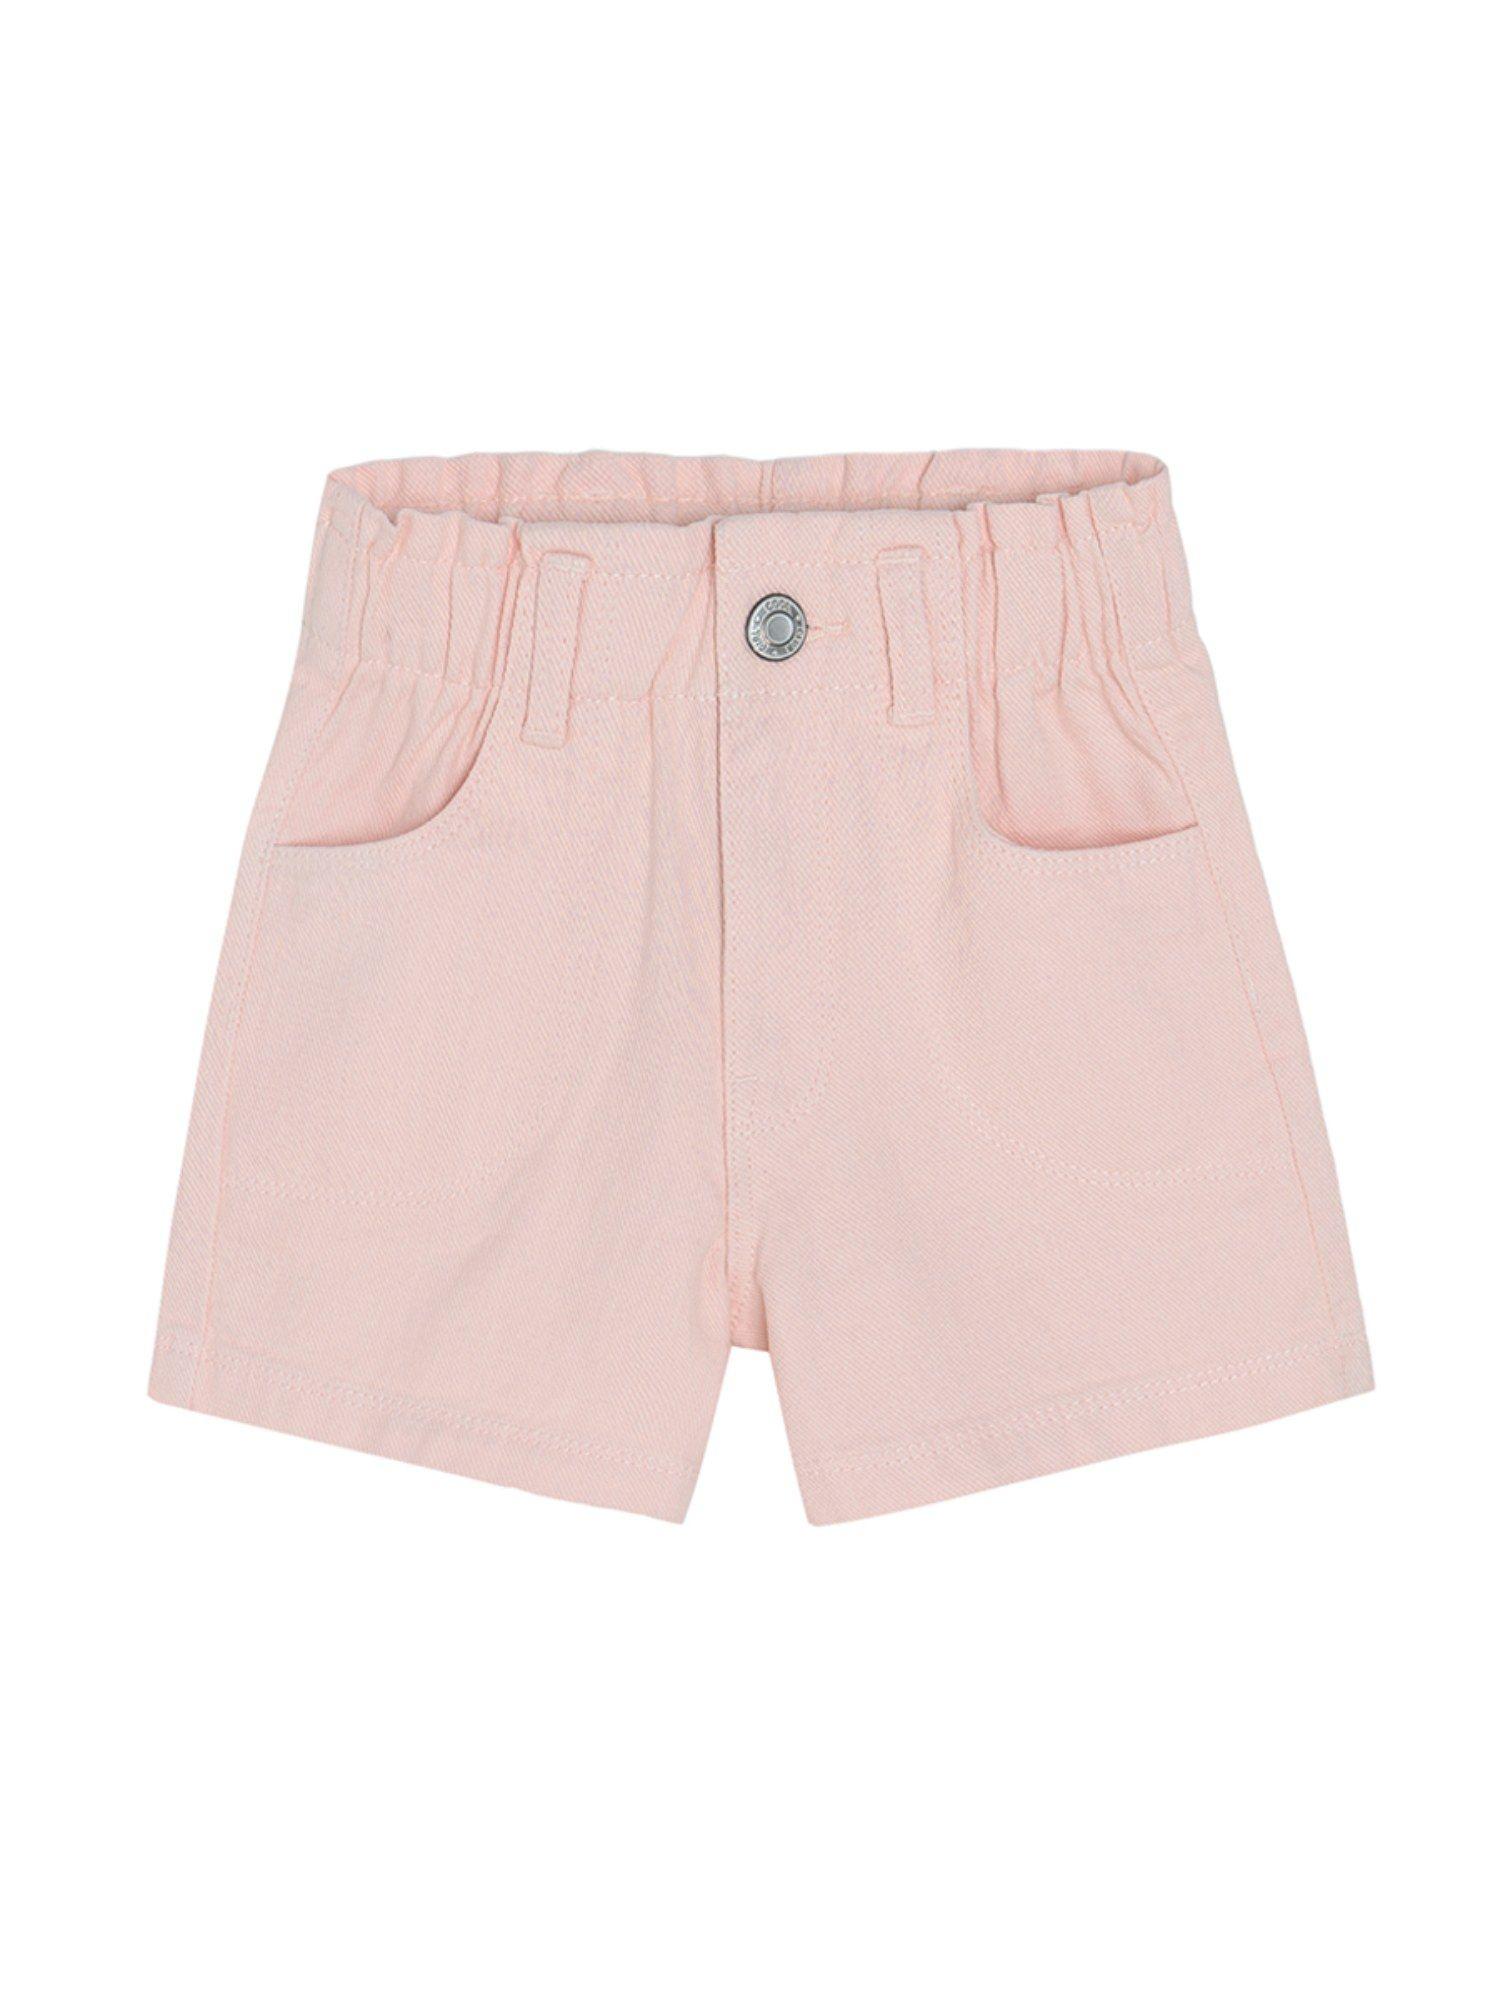 smyk girls pink woven shorts